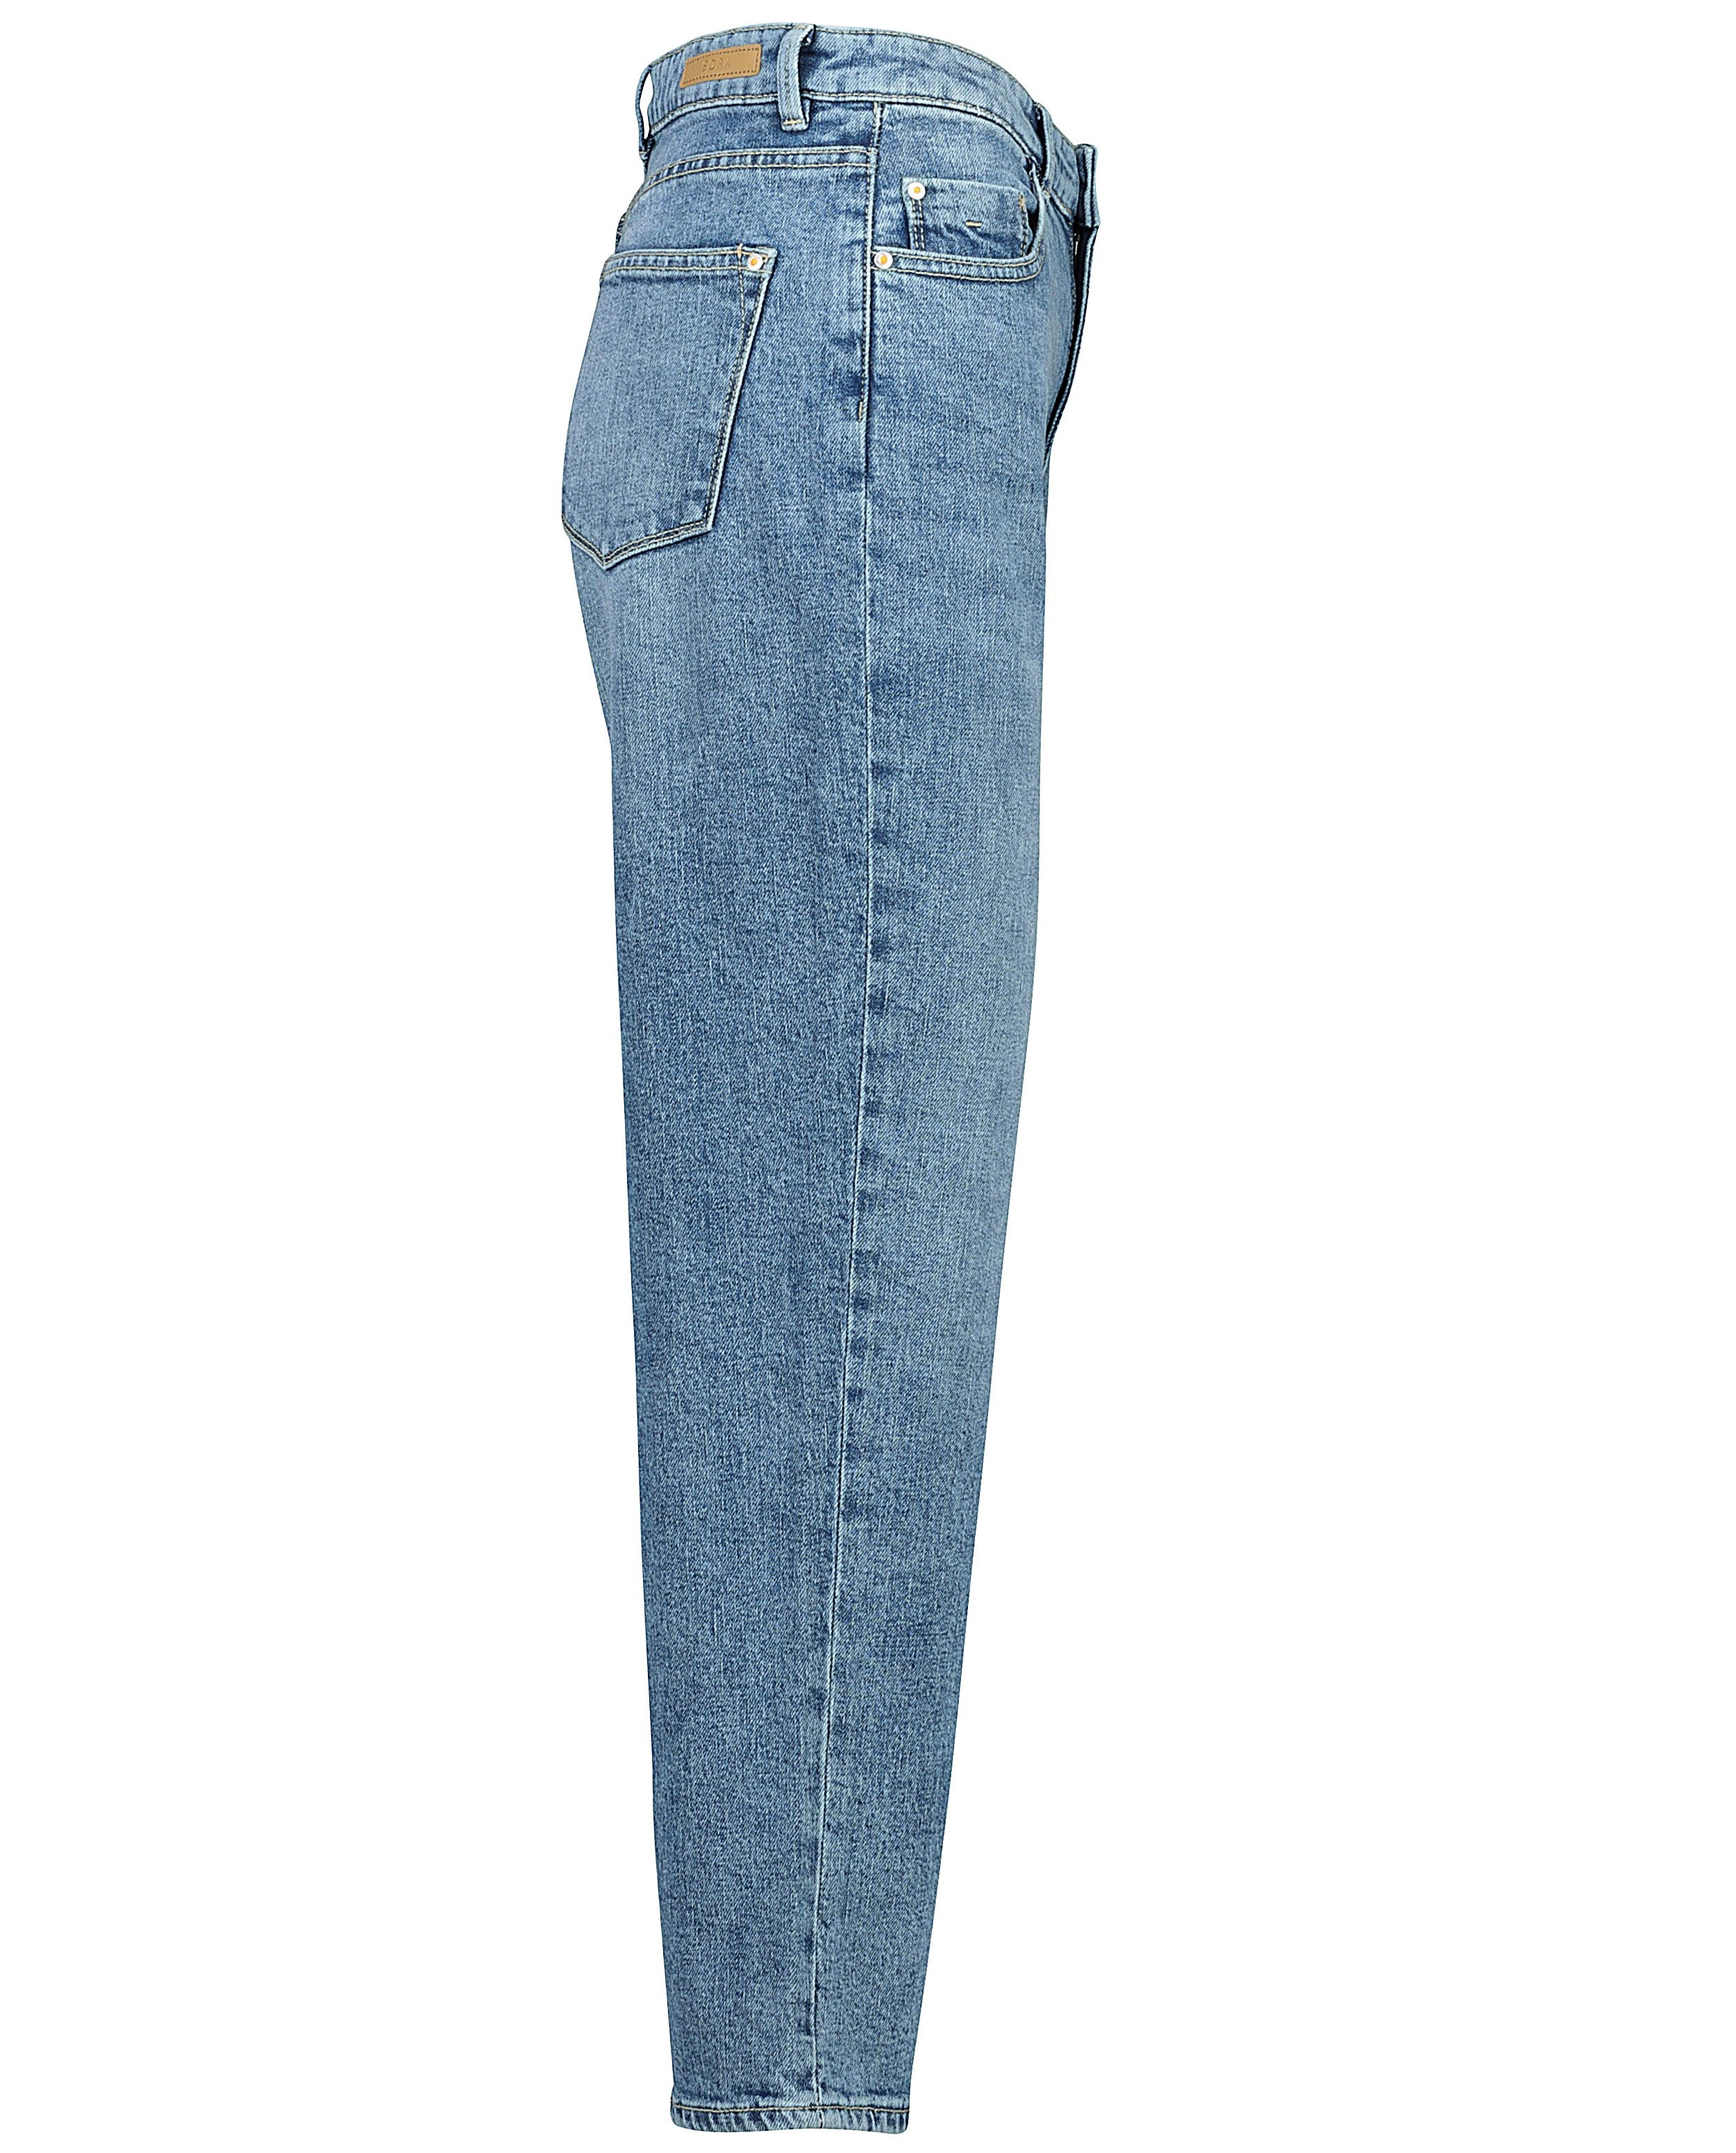 Jeans - Lichtblauws straight jeans